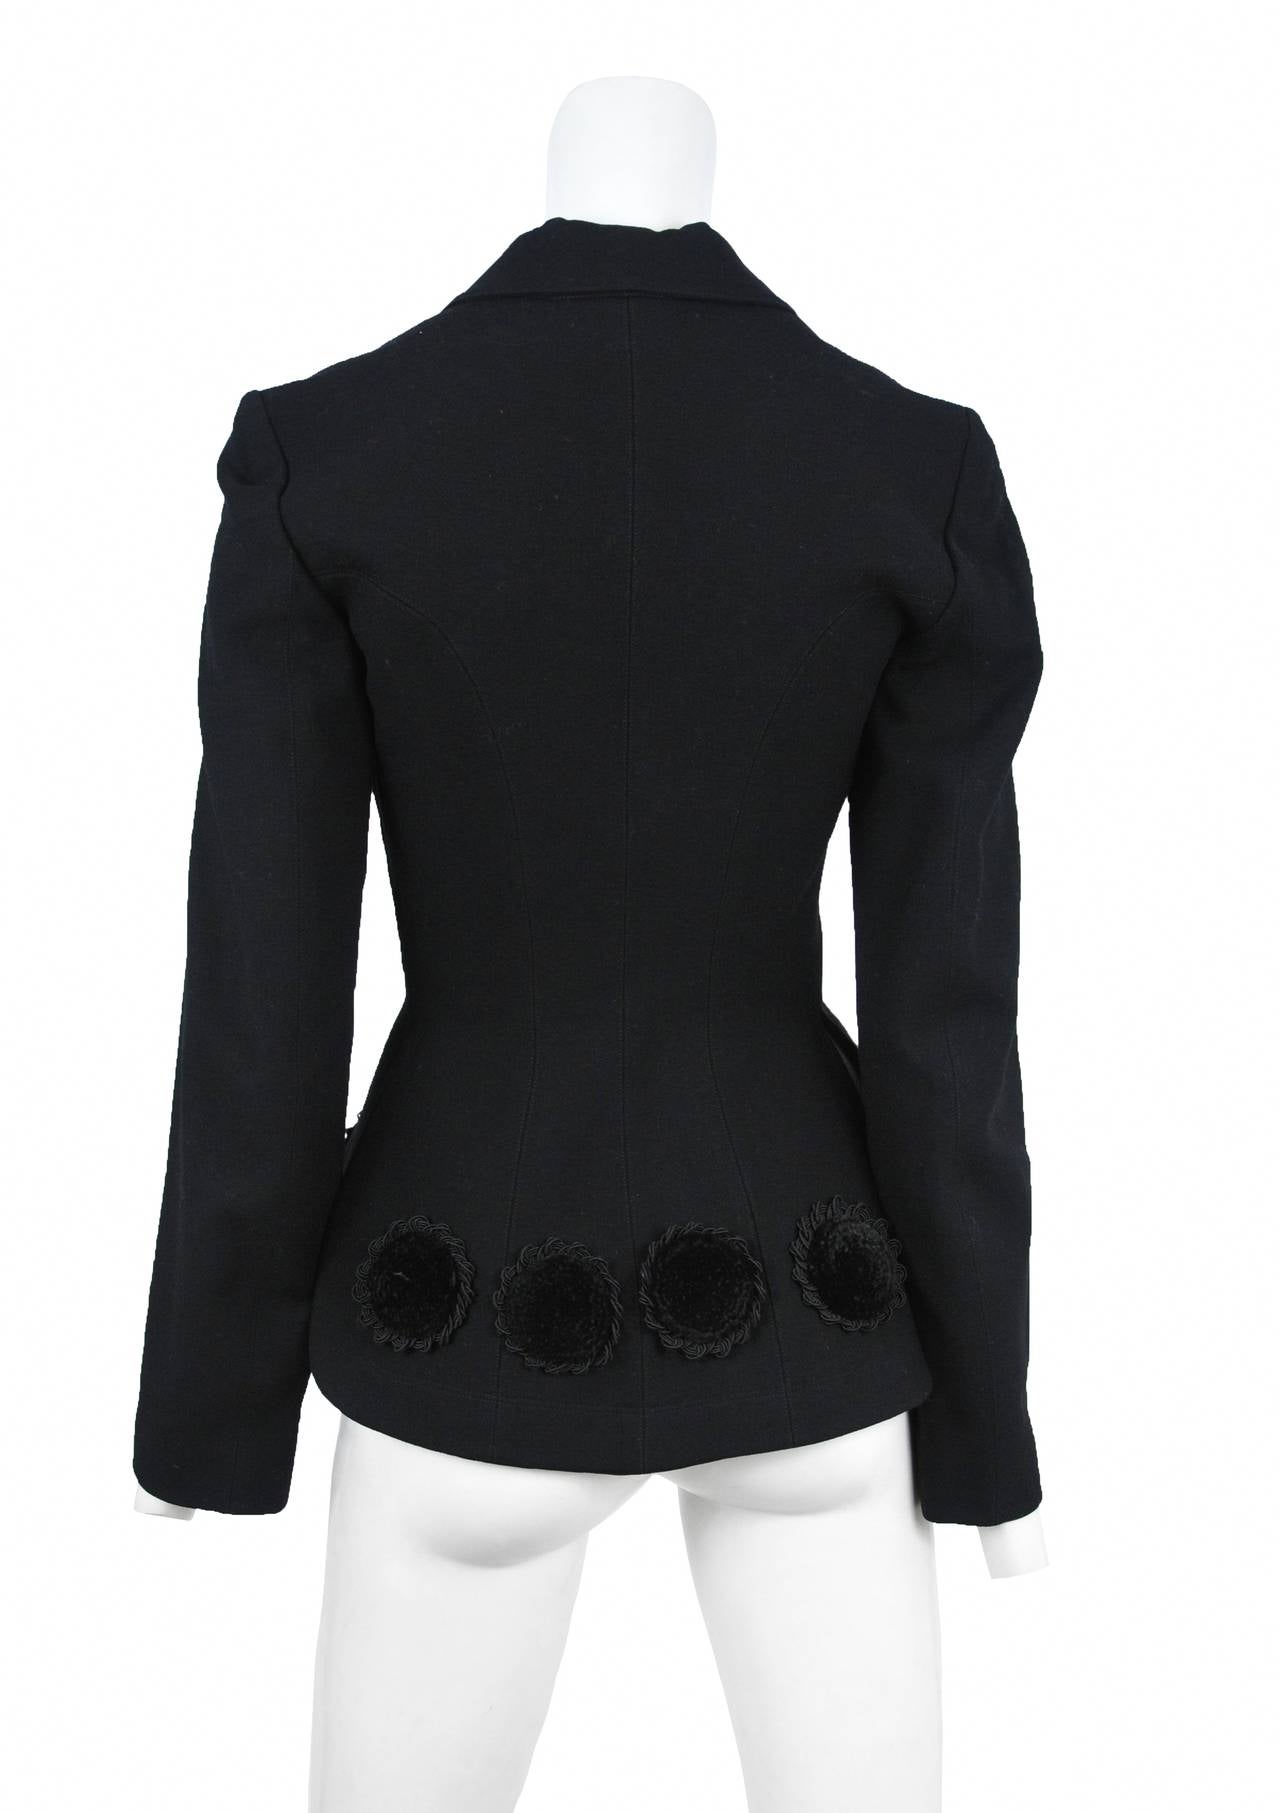 Vintage Alaia black blazer with velvet circle appliques adorning the hem.